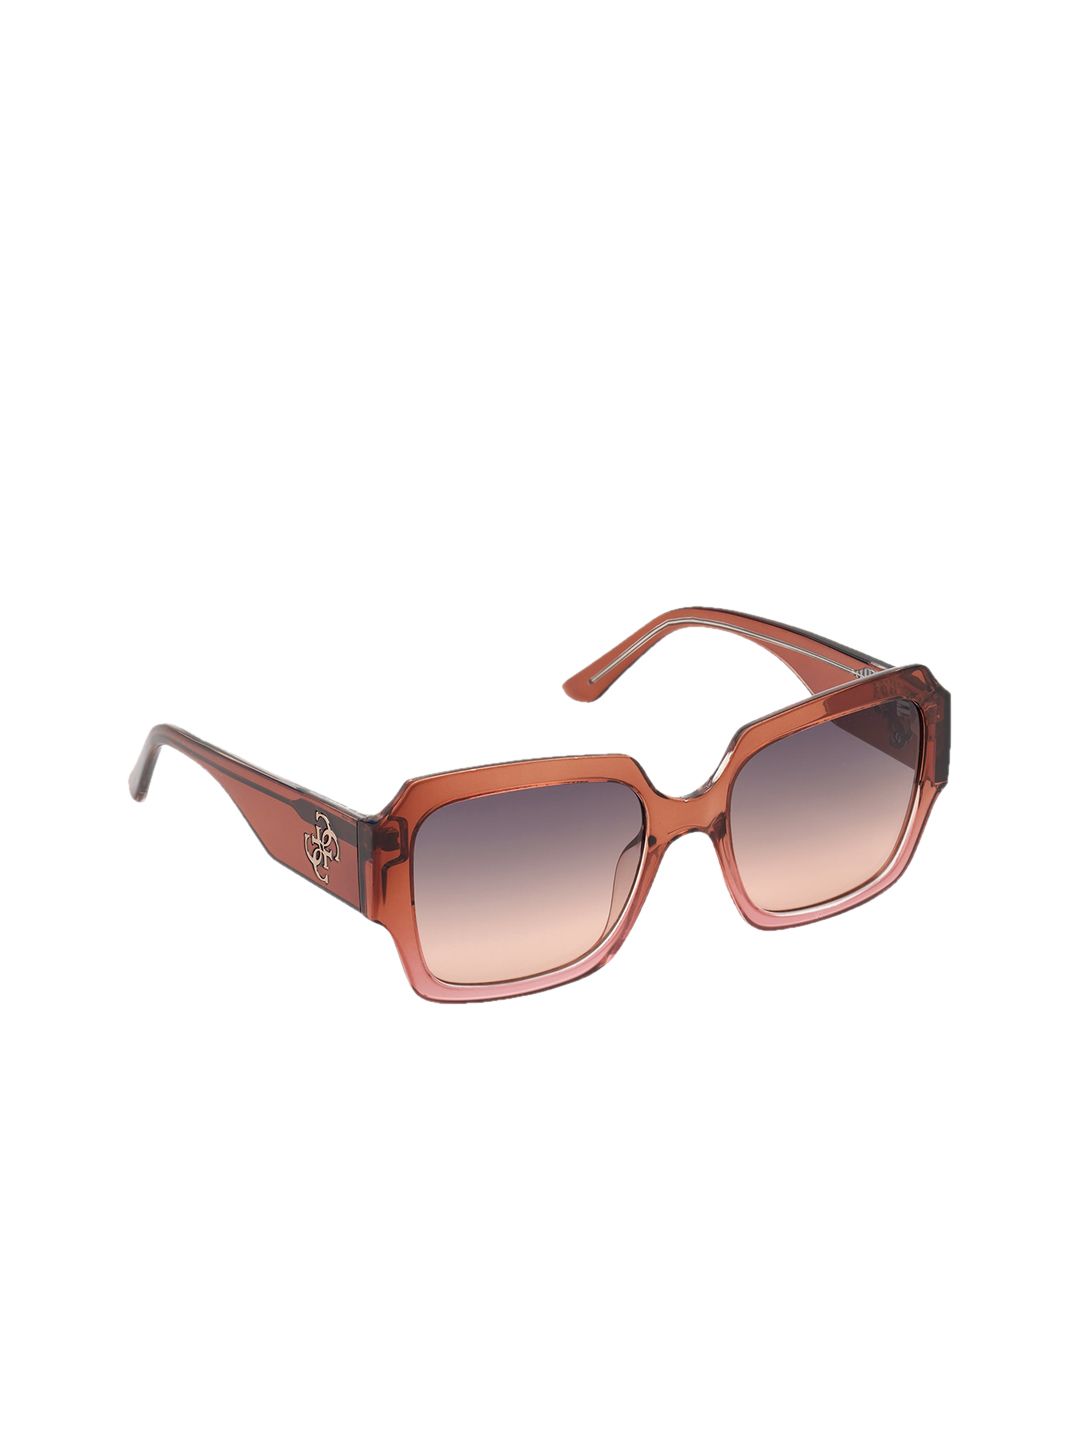 Guess Women Purple Lens & Brown UV Protected Square Sunglasses GU7681 54 47B Price in India